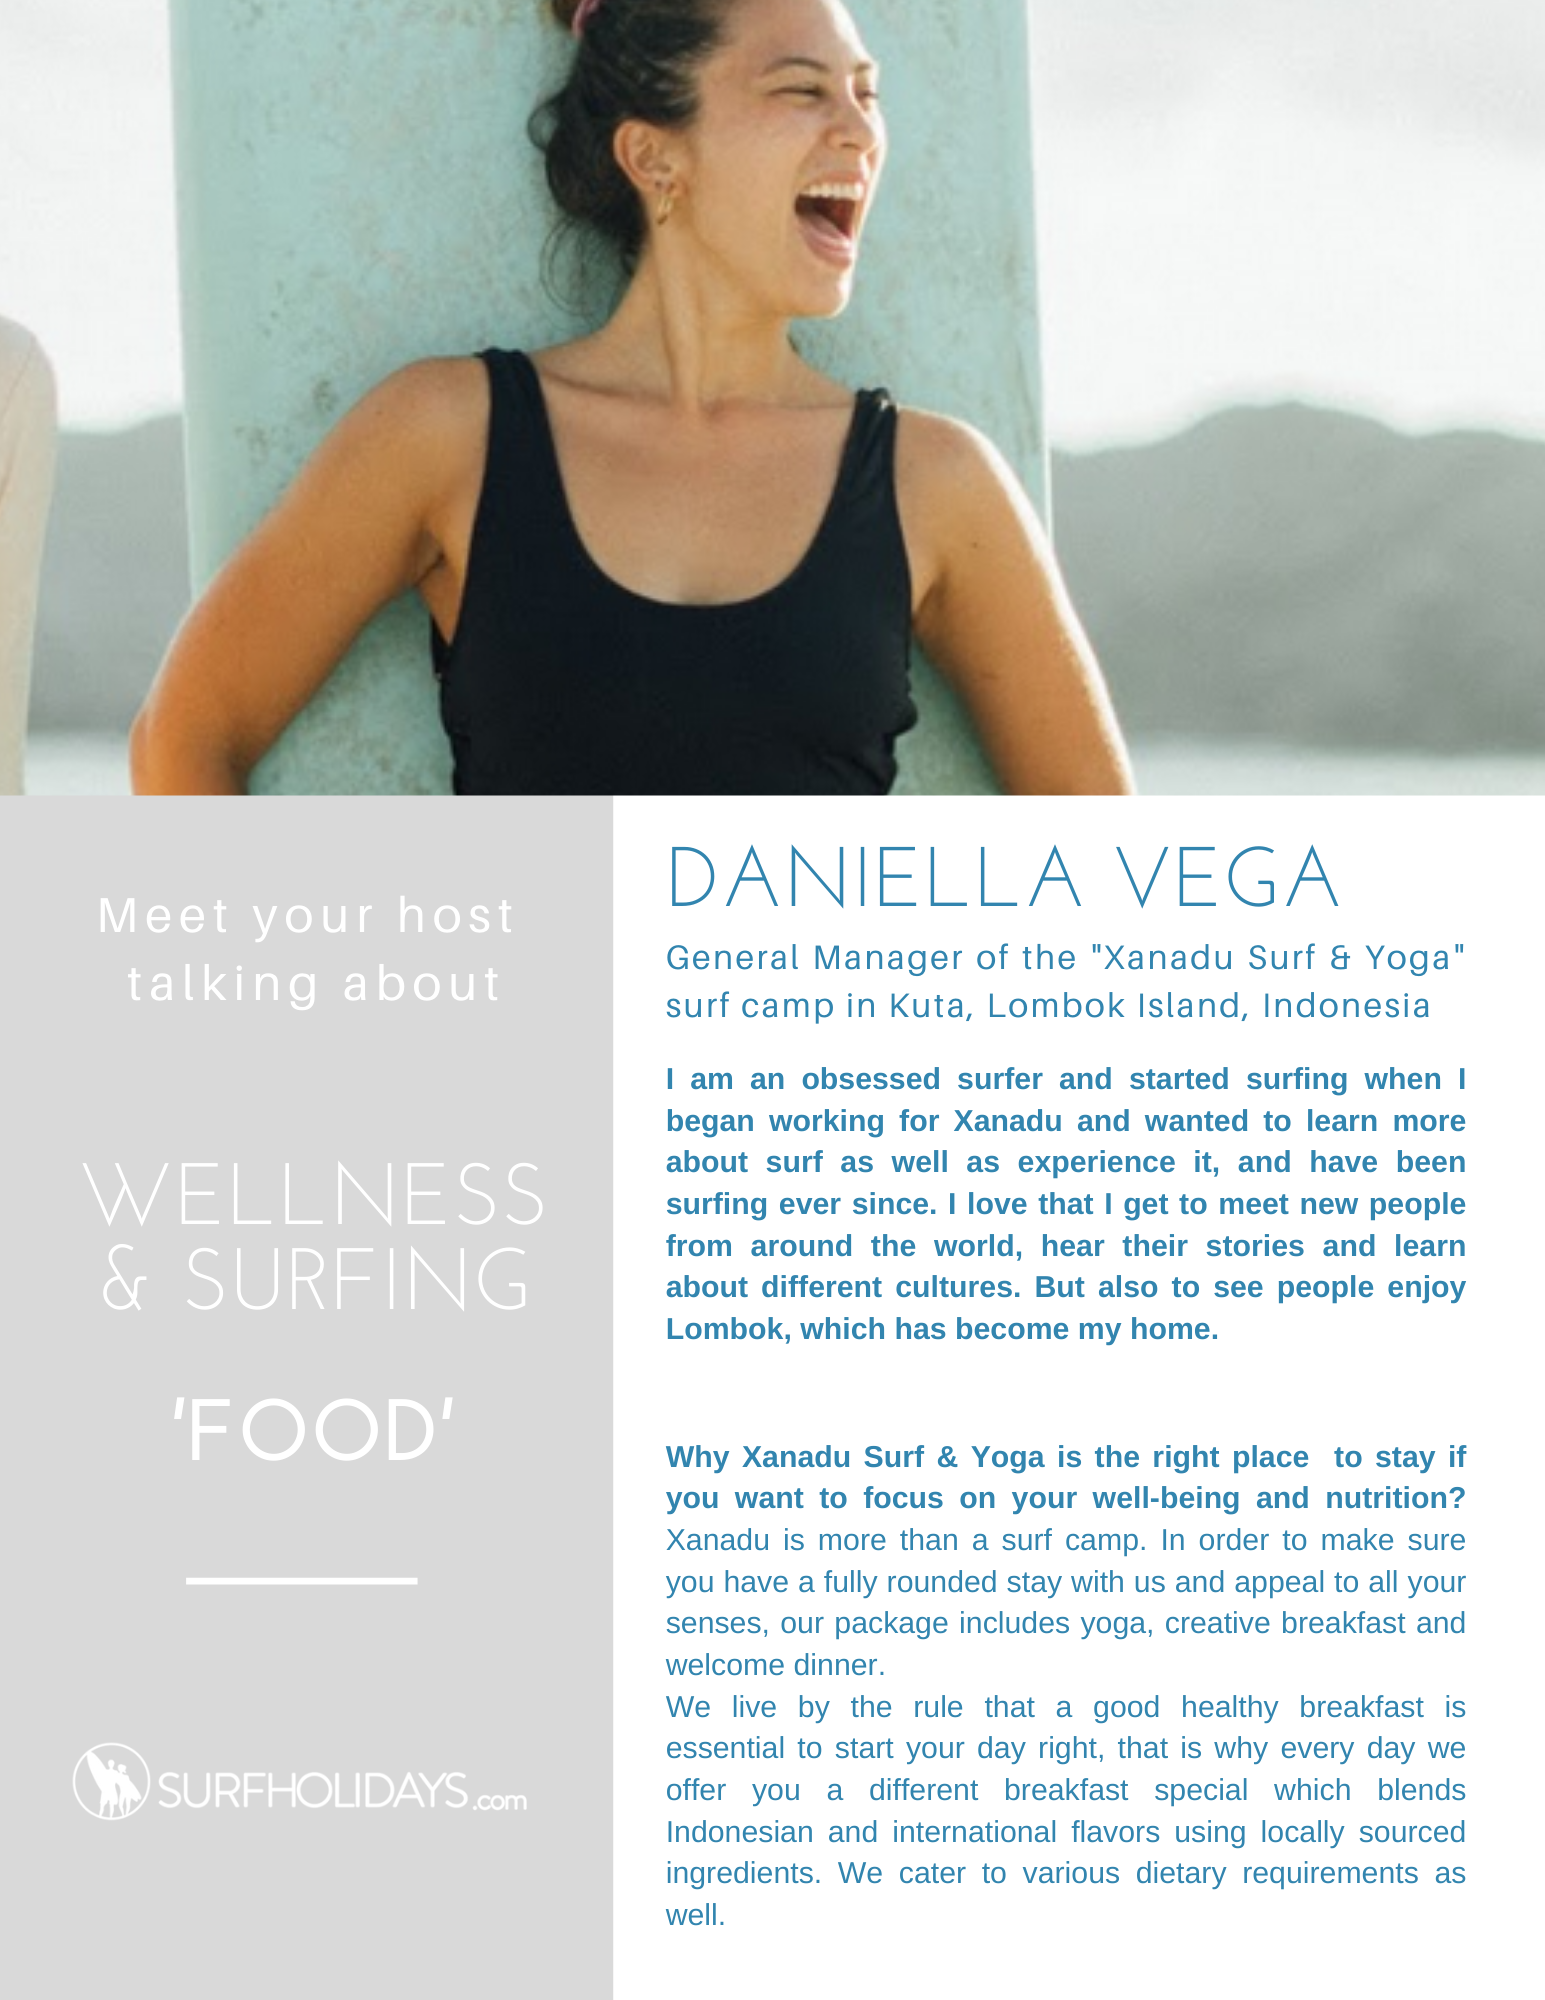 Meet your Host - Daniella from Xanadu Surf & Yoga